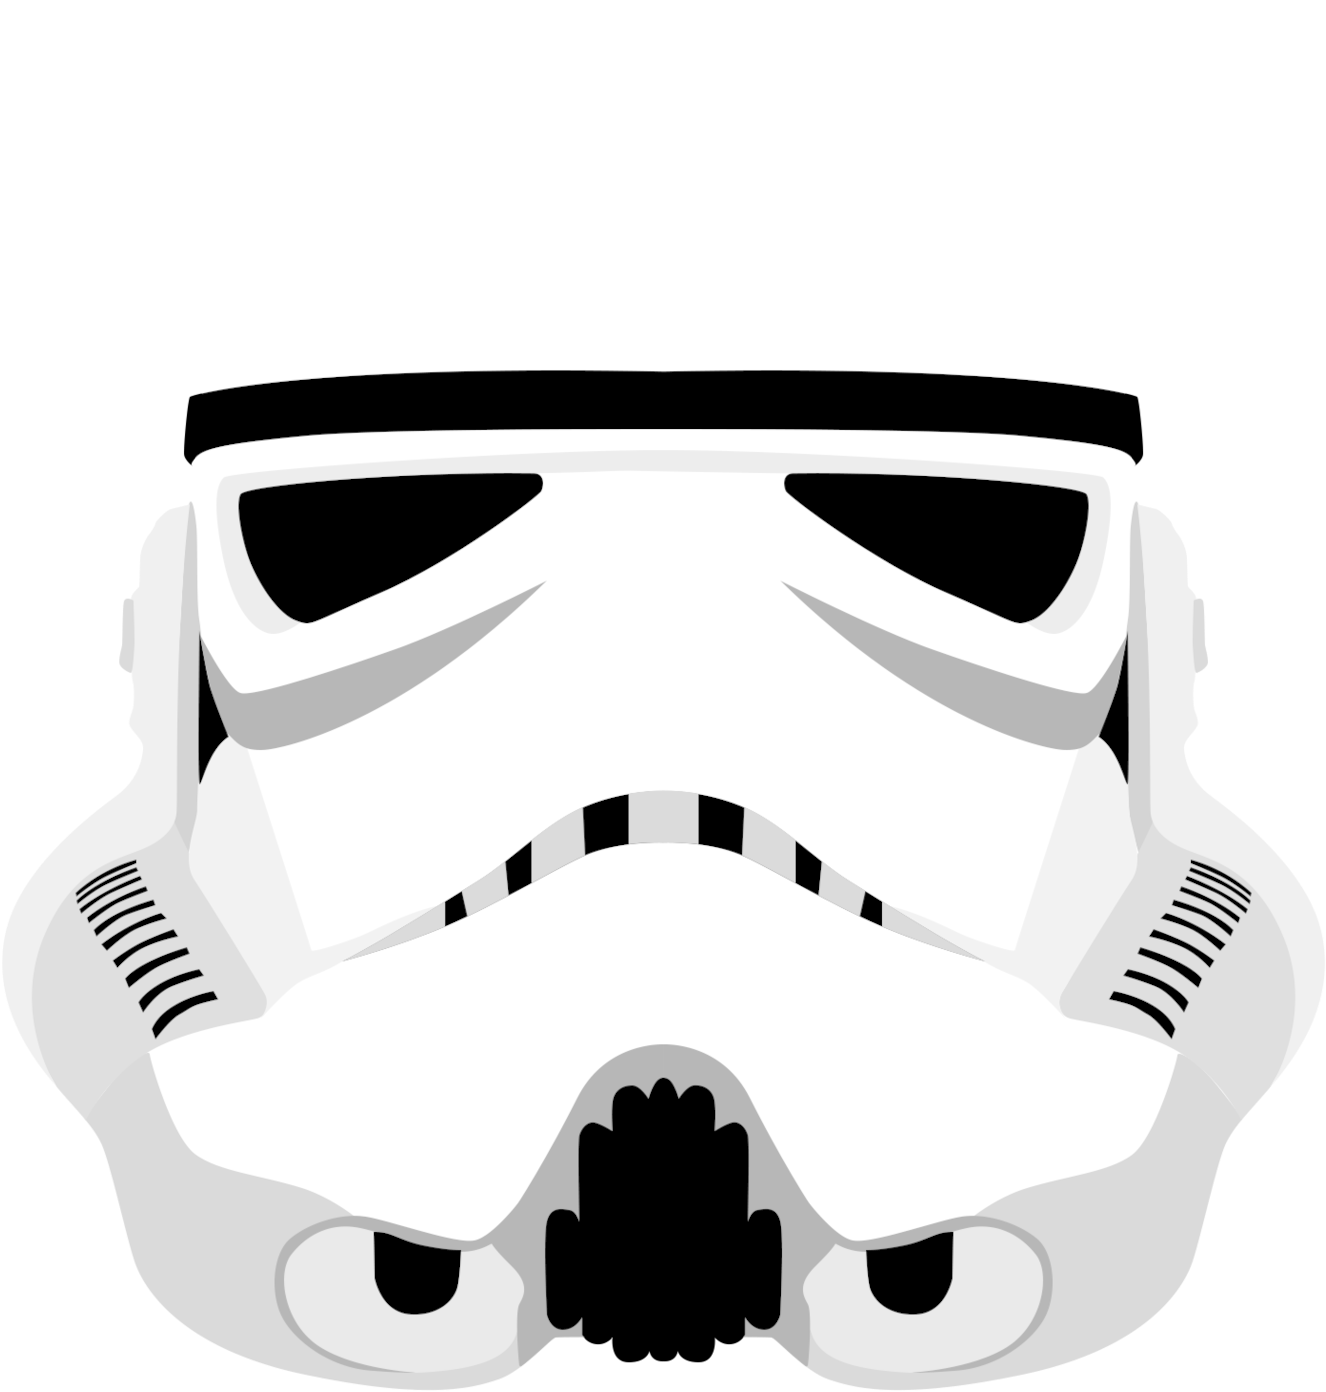 Stormtrooper Helmet PNG High-Quality Image